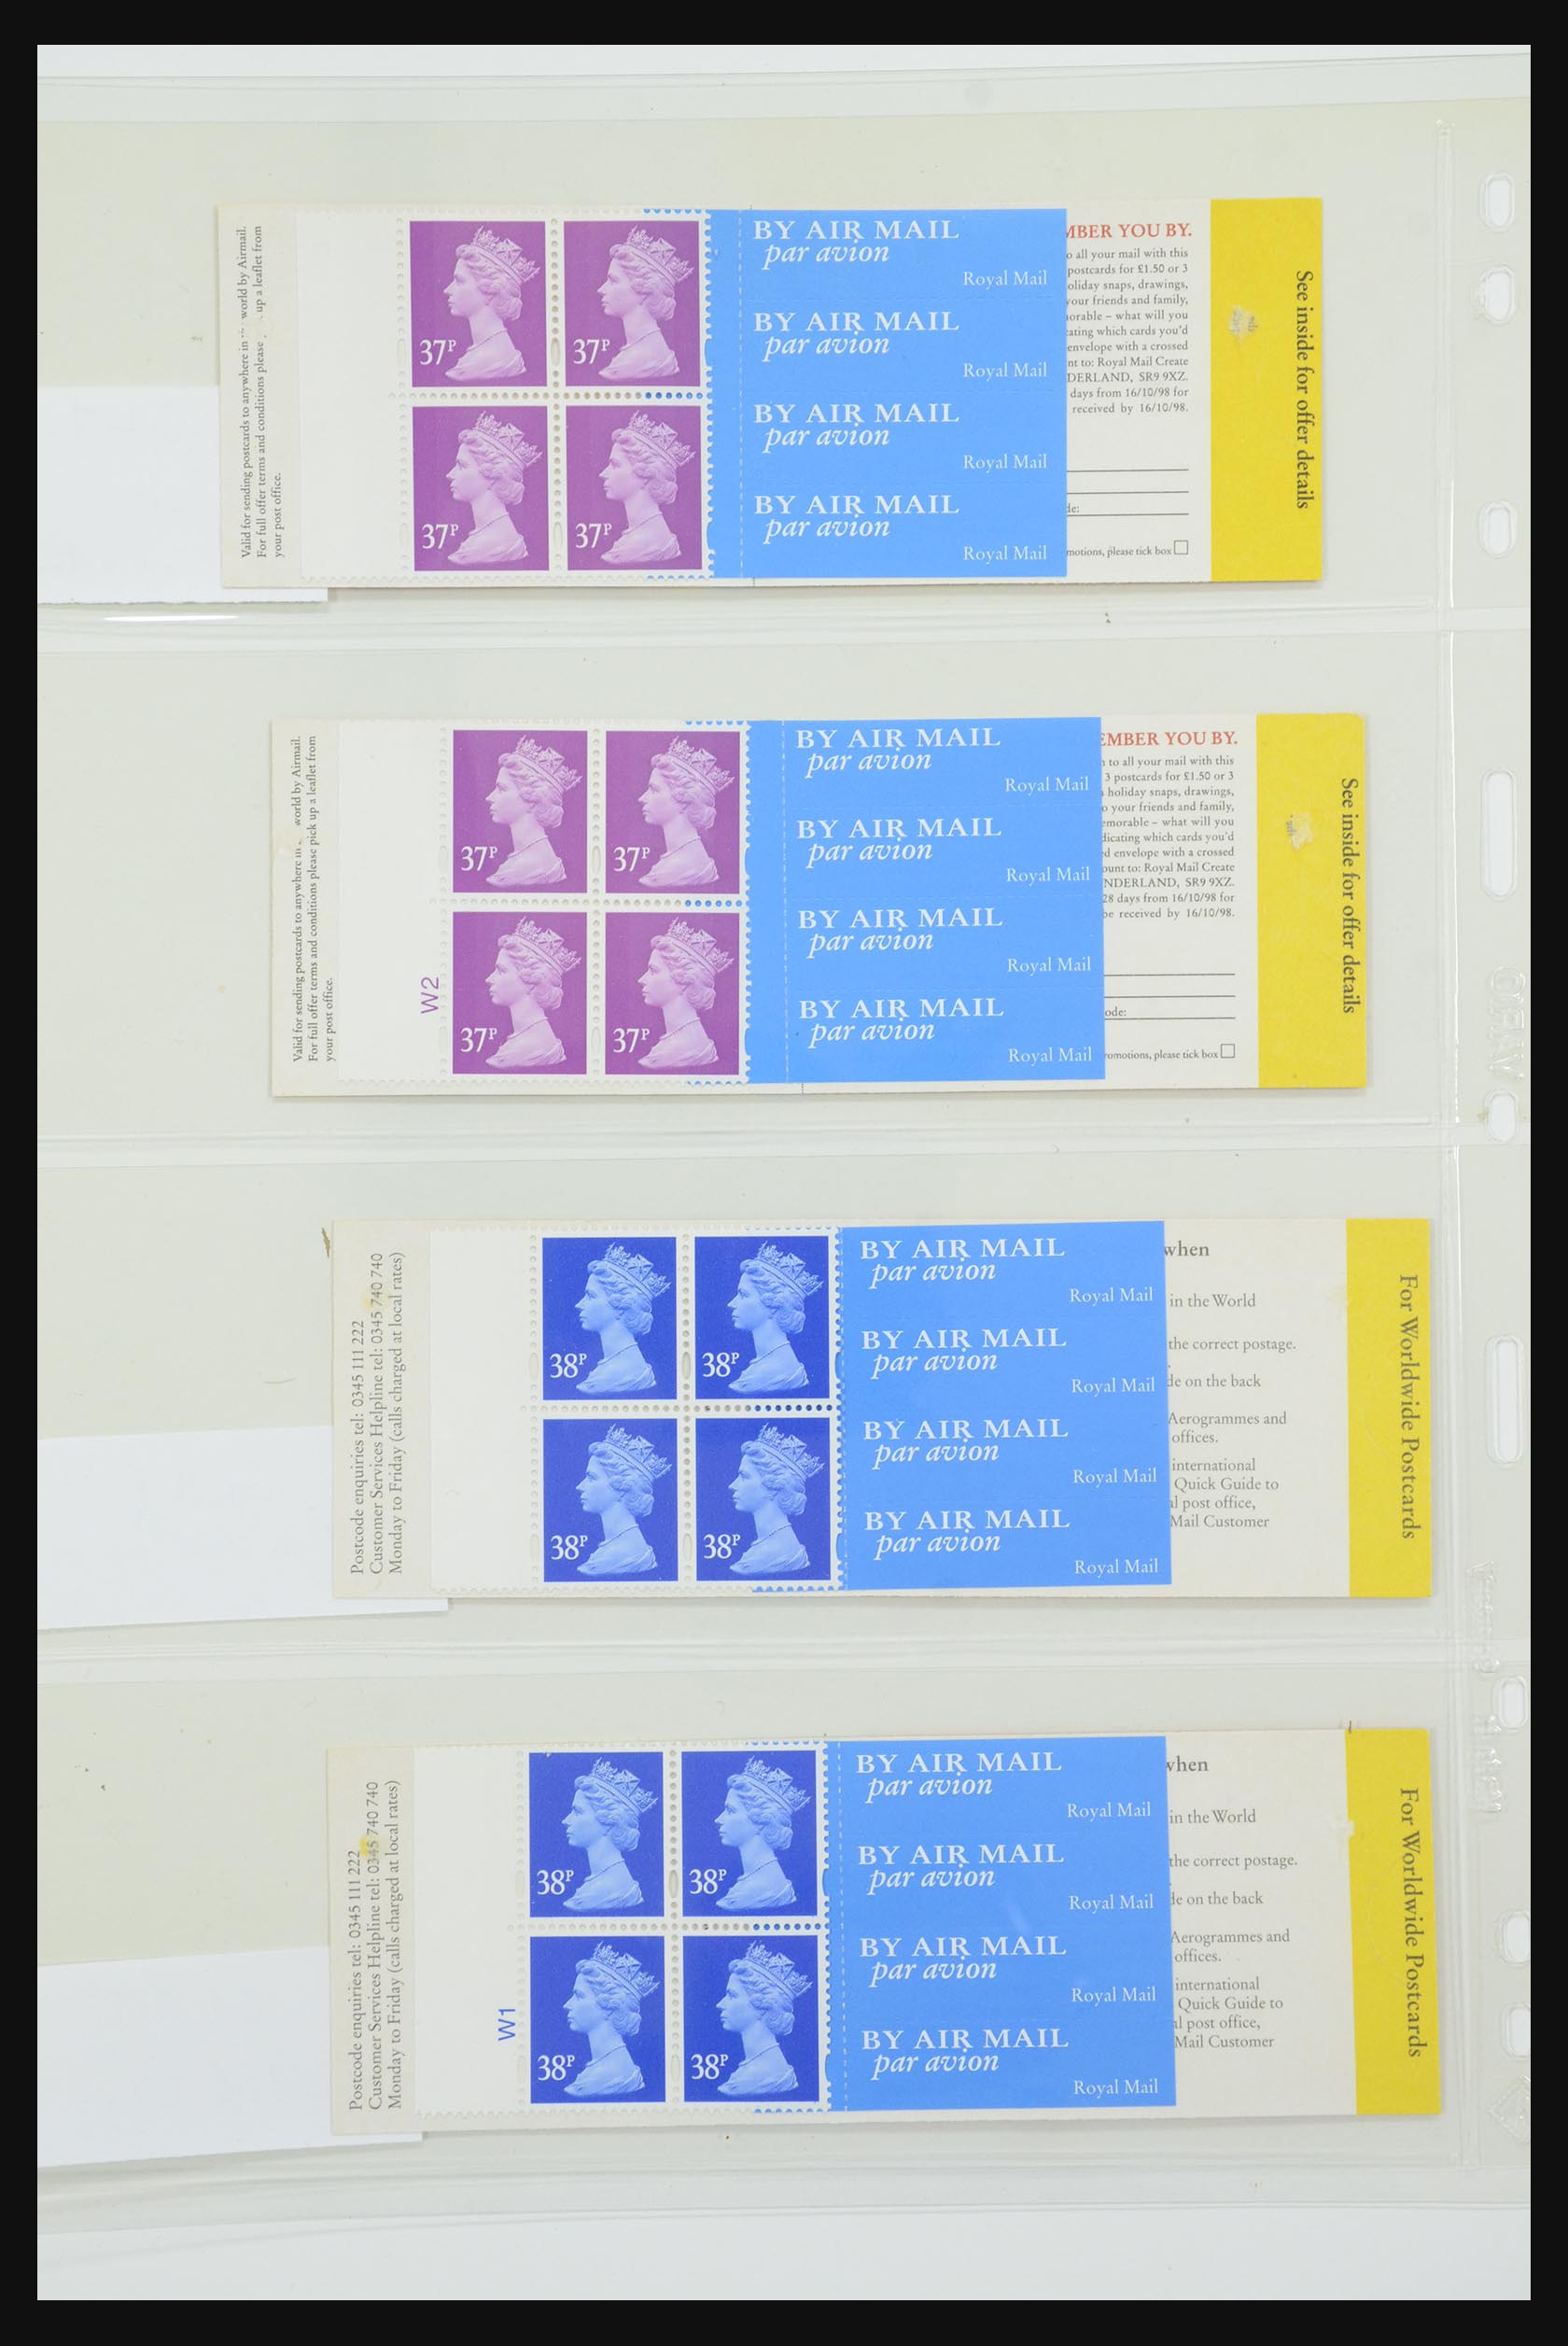 31959 058 - 31959 Great Britain stampbooklets 1987-2016!!